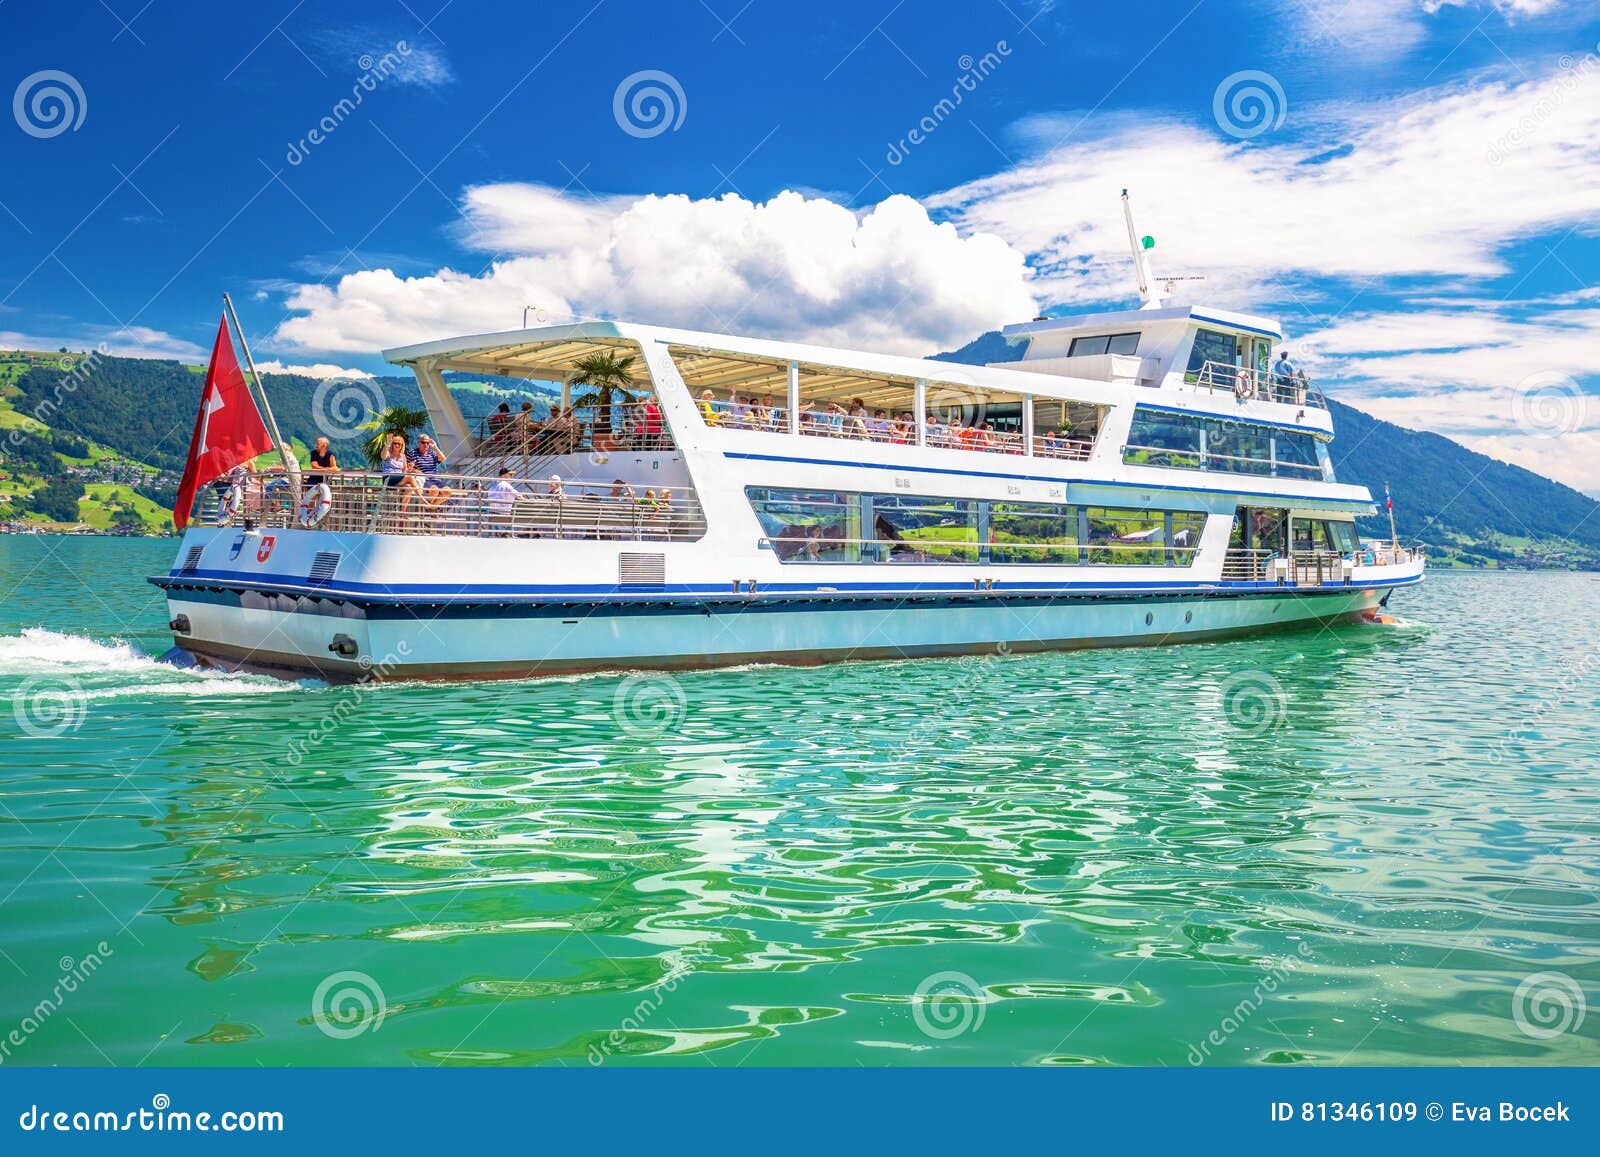 lake zug boat cruise